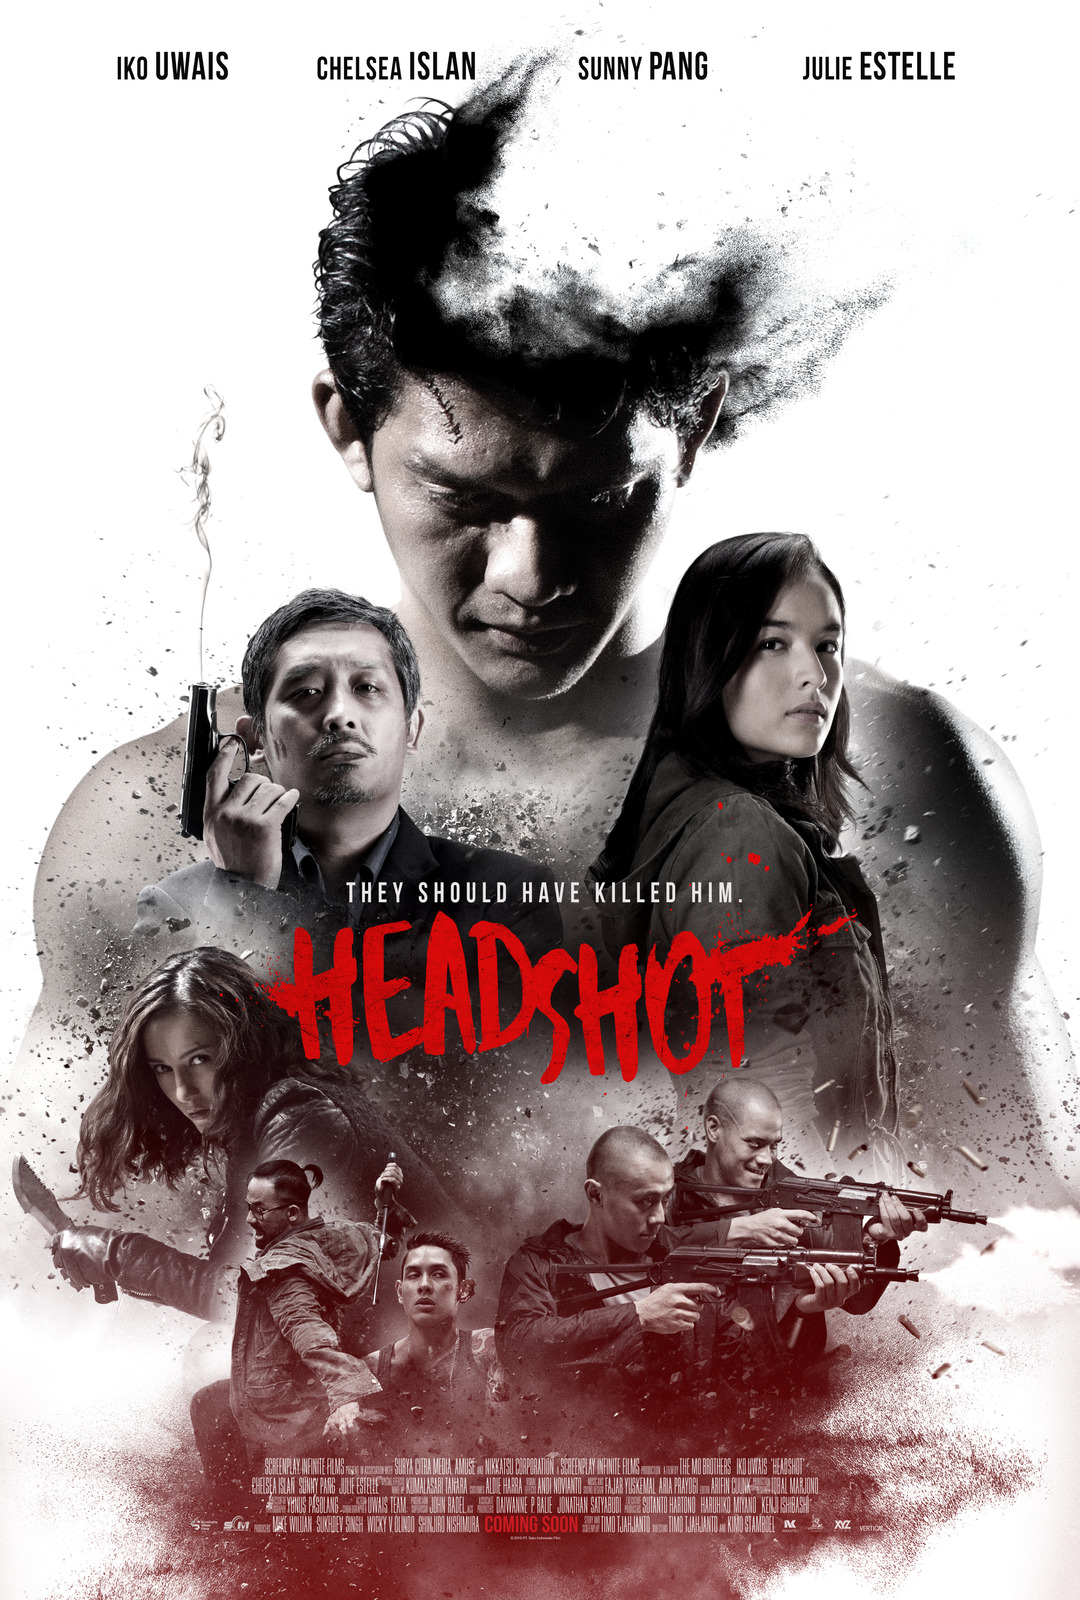 TIFF 2016 HEADSHOT Poster.jpg